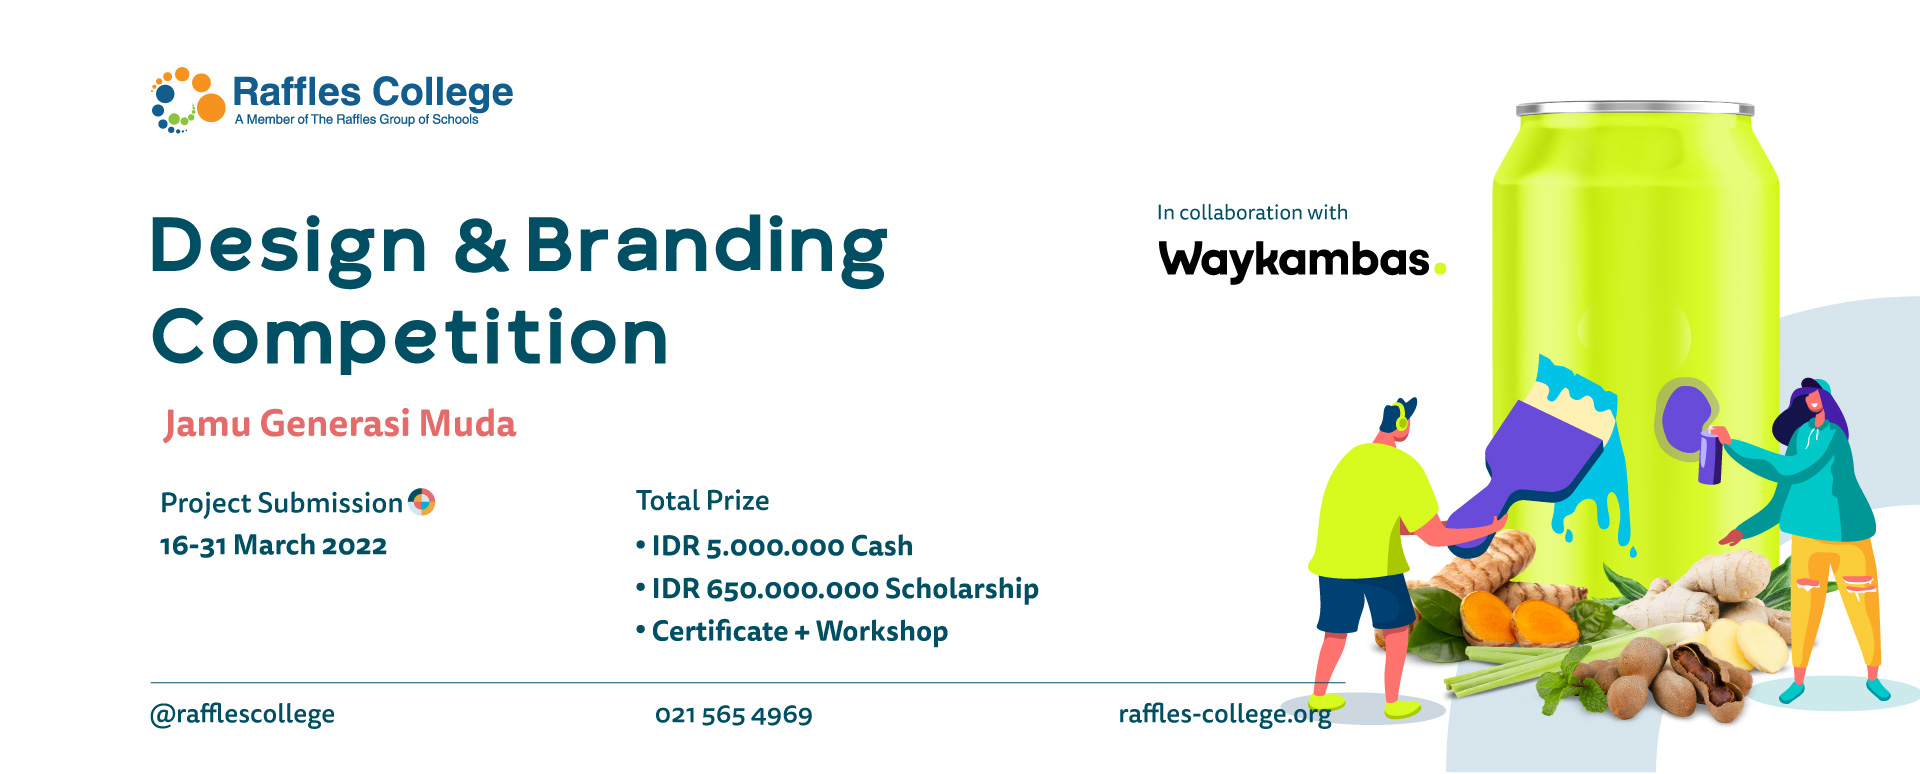 Raffles College Design & Branding Competition 2022